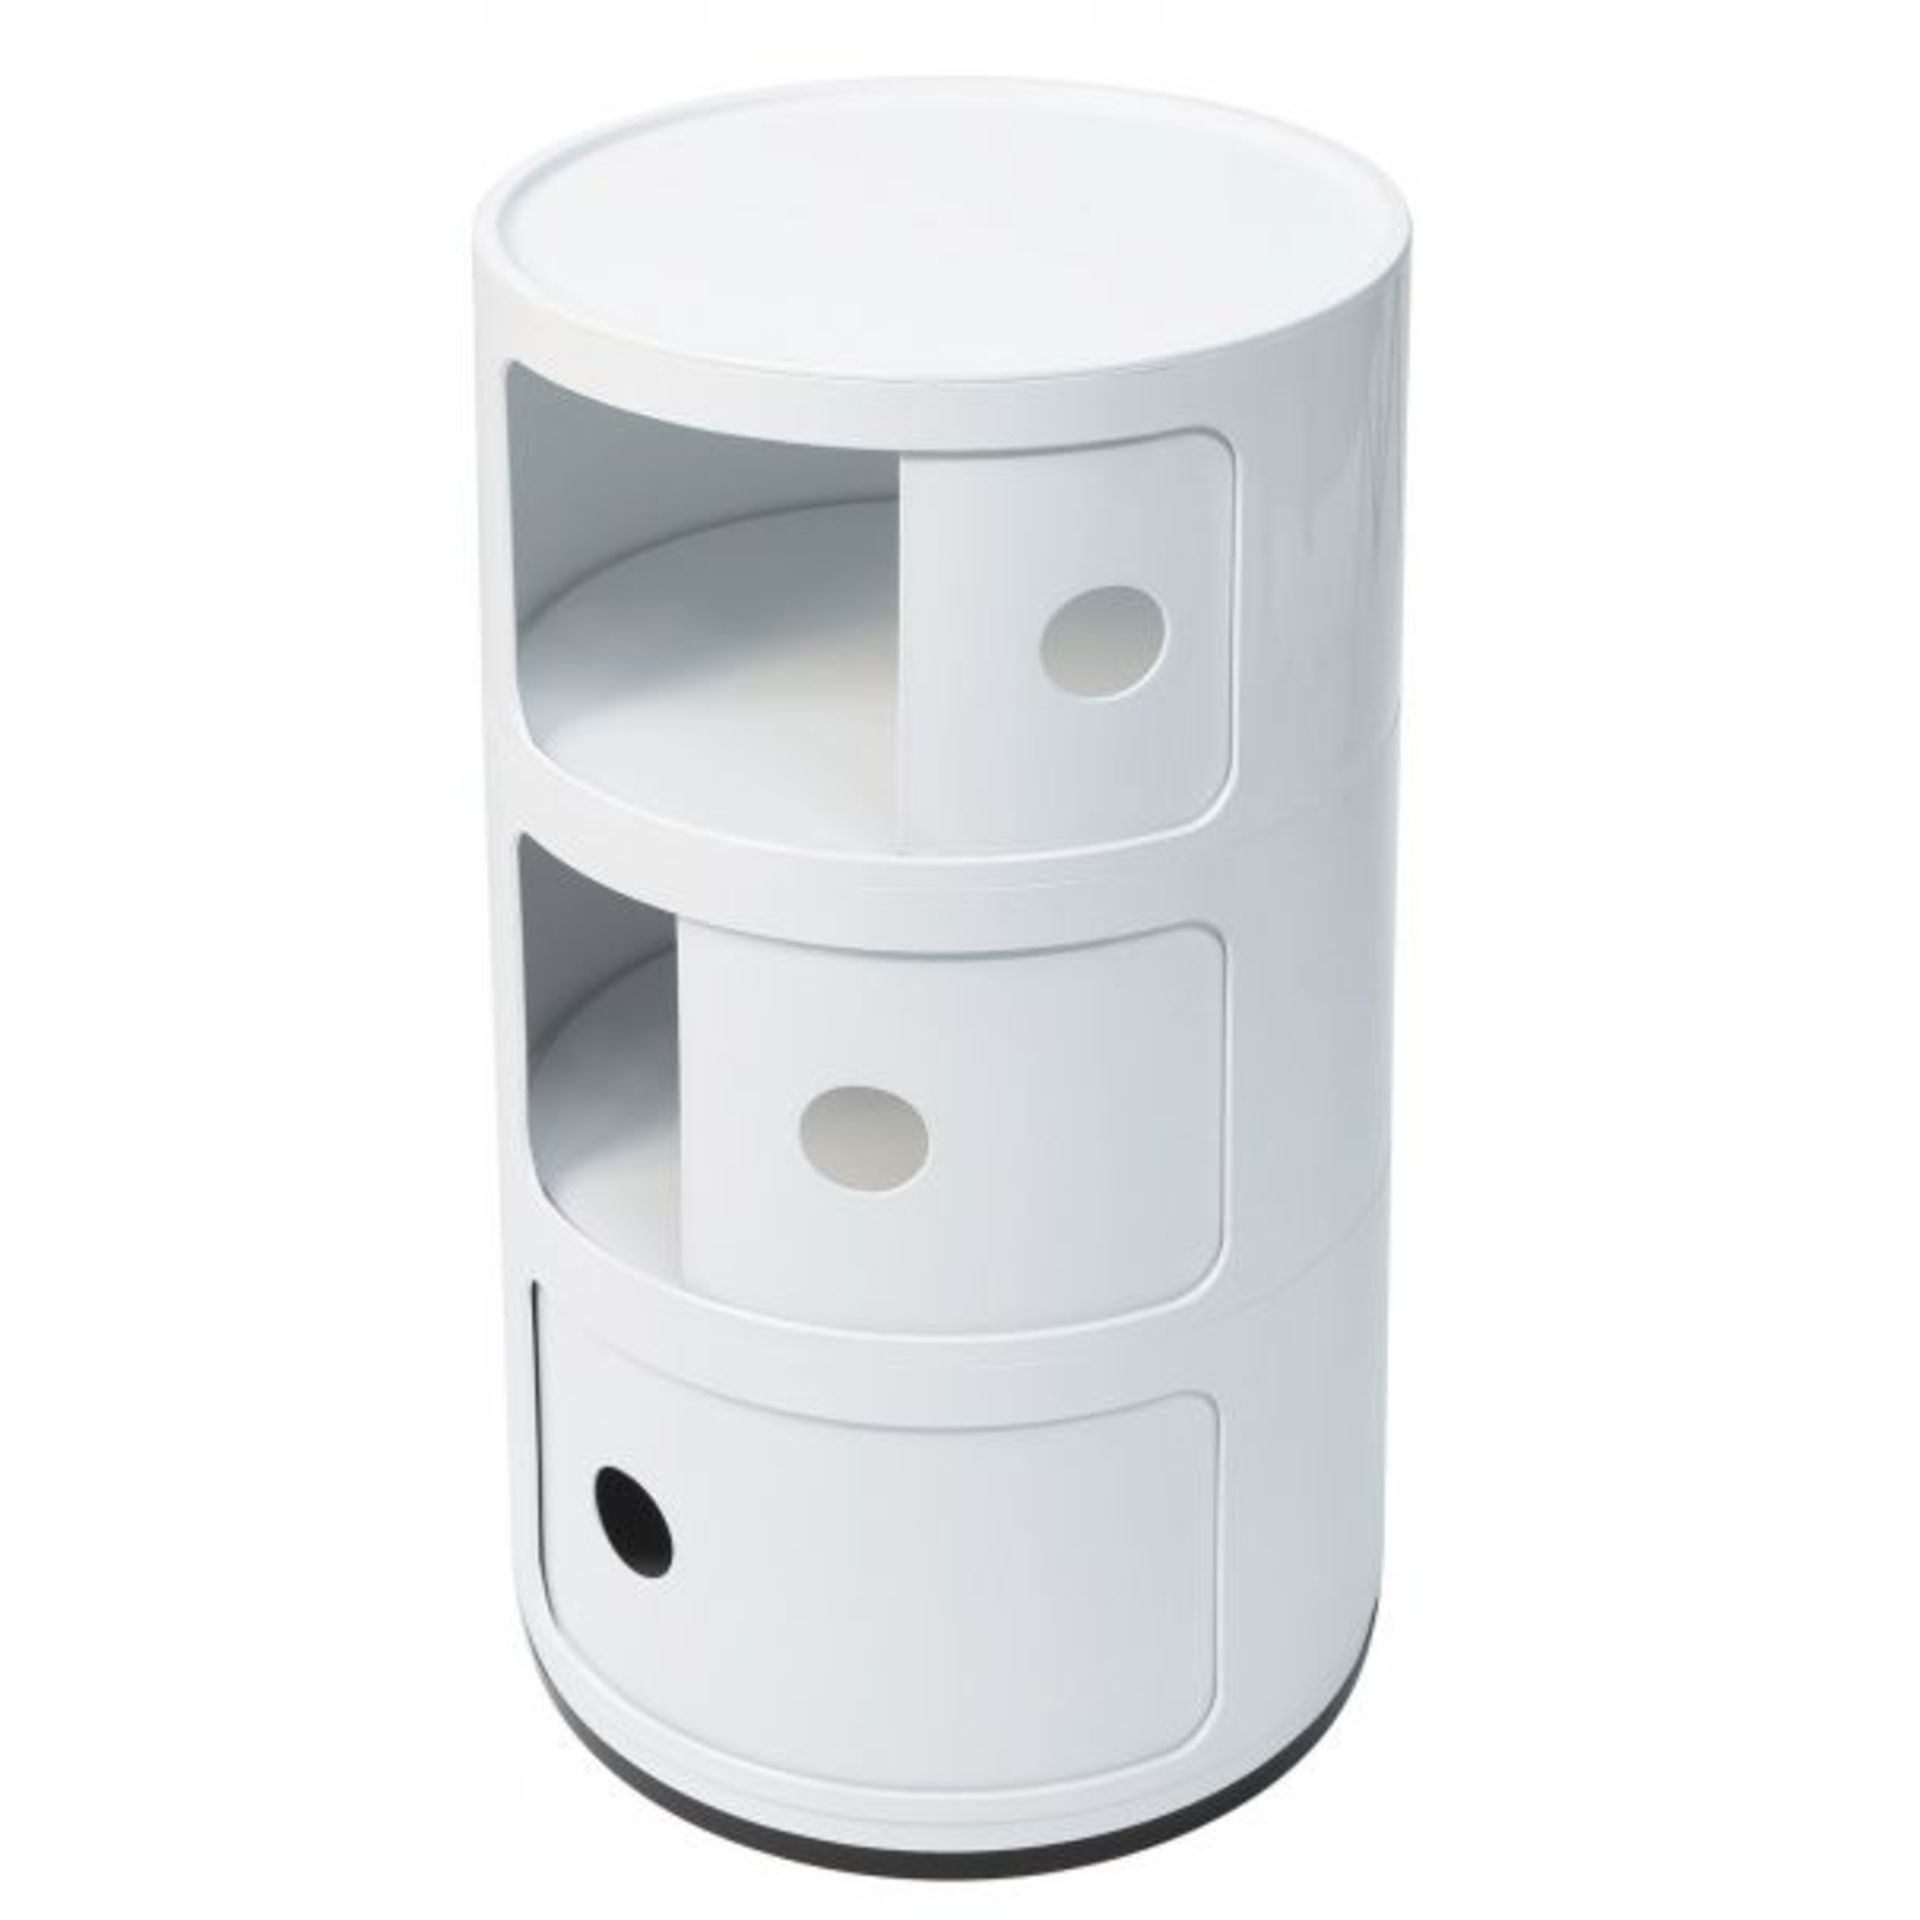 1 x 3 Tier Componibili Storage Unit White - Dimensions: 32(w) x 32(d) x 60(h) cm - Brand New Boxed S - Image 6 of 6